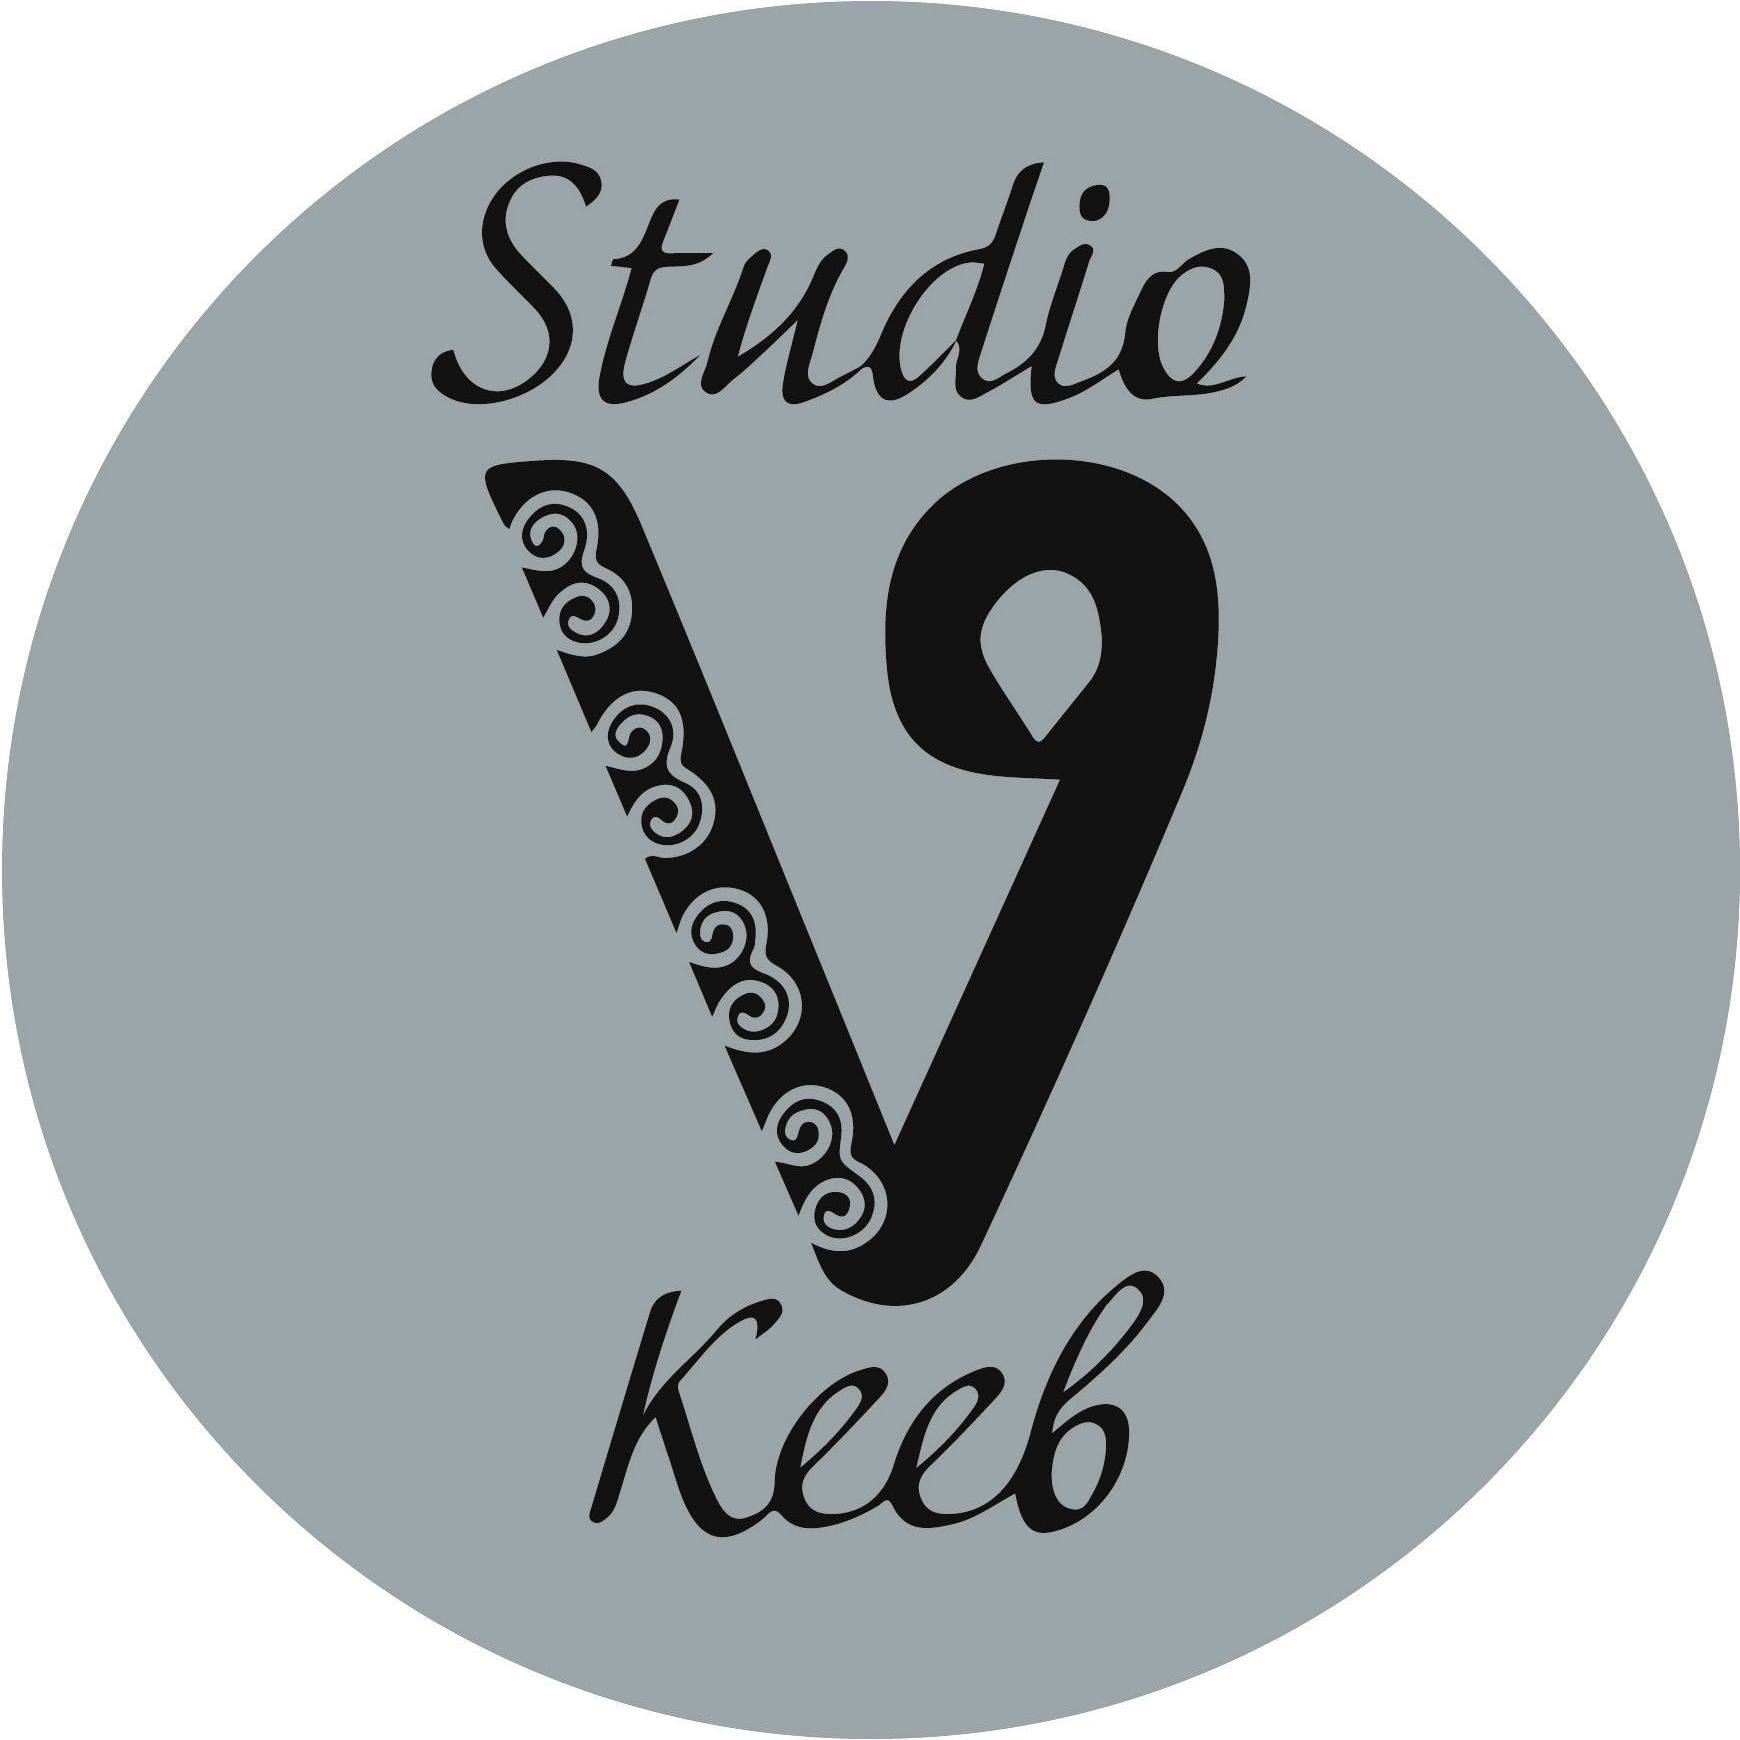 Studio Keeb